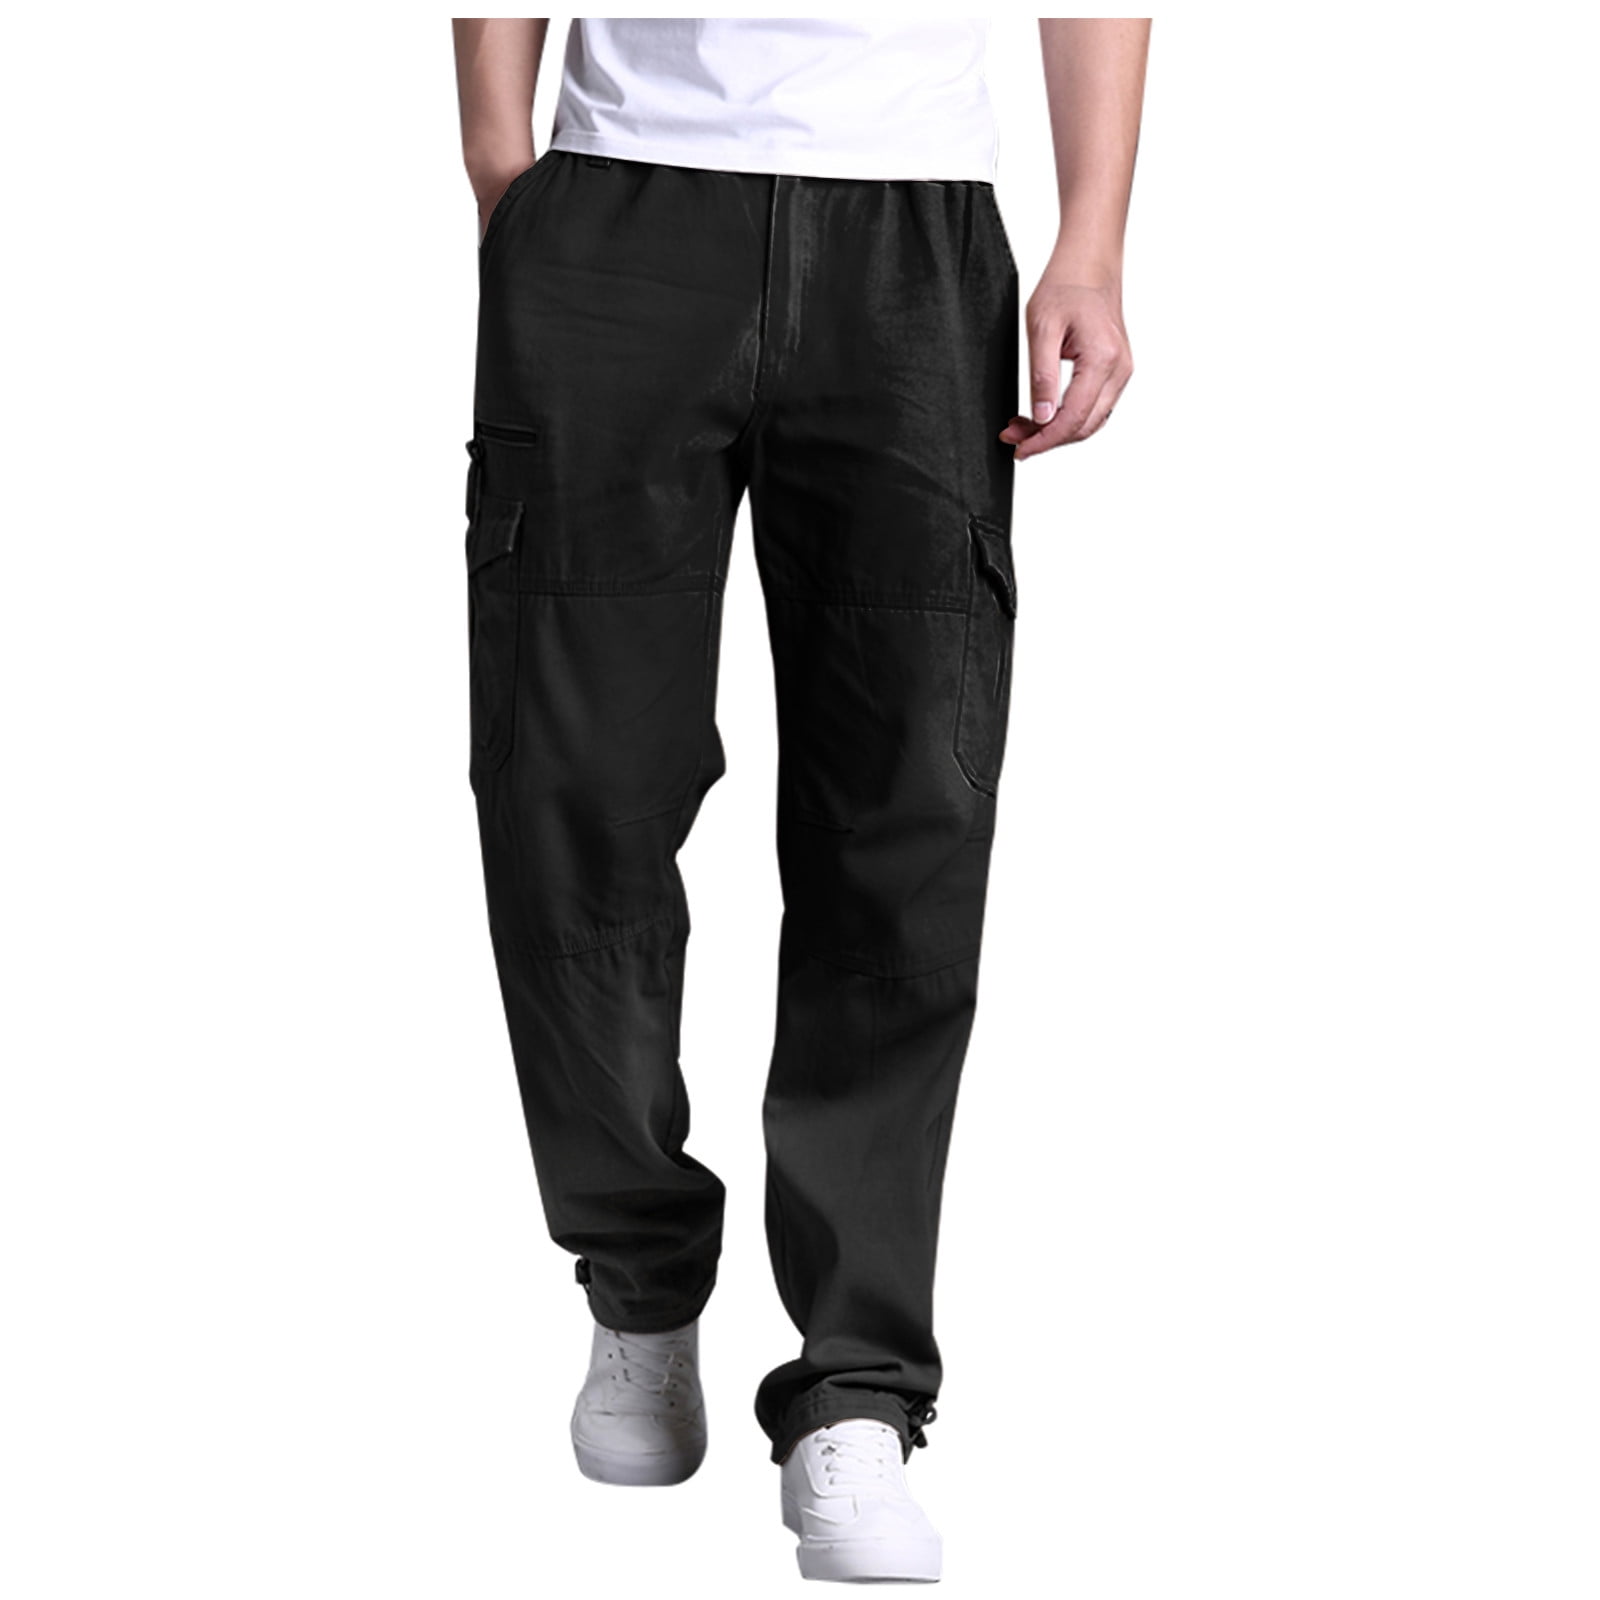 Comfort fit cotton jogger trousers for men Oxford Tan La Martina | Shop  Online